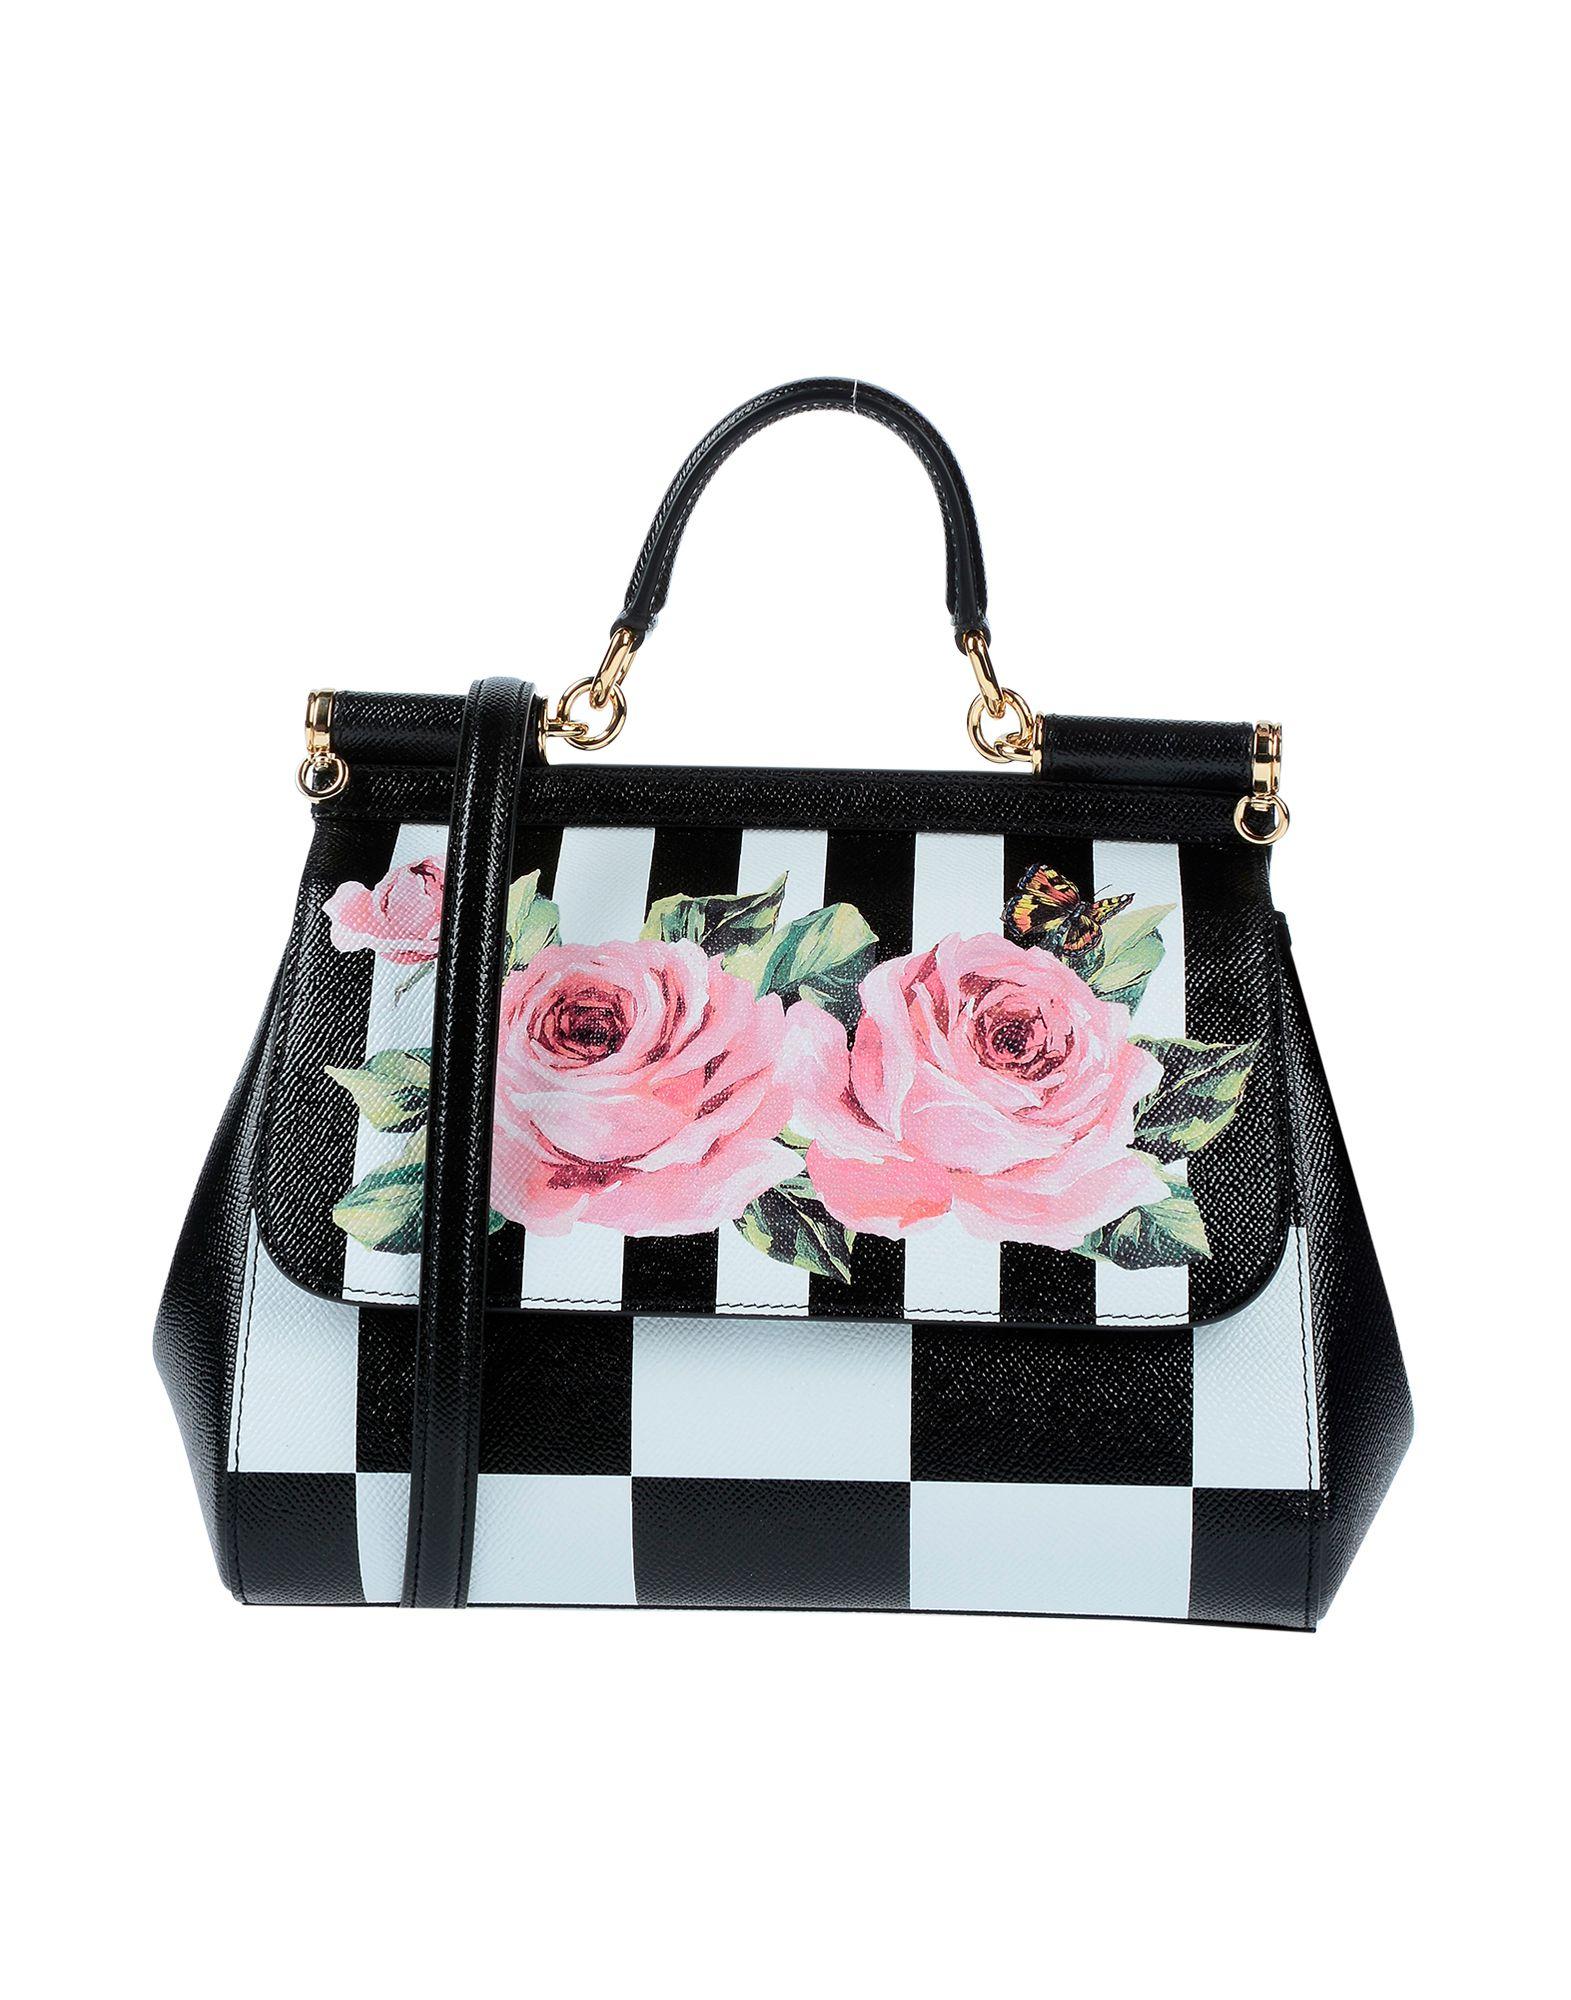 Dolce & Gabbana Handbag in Black - Lyst